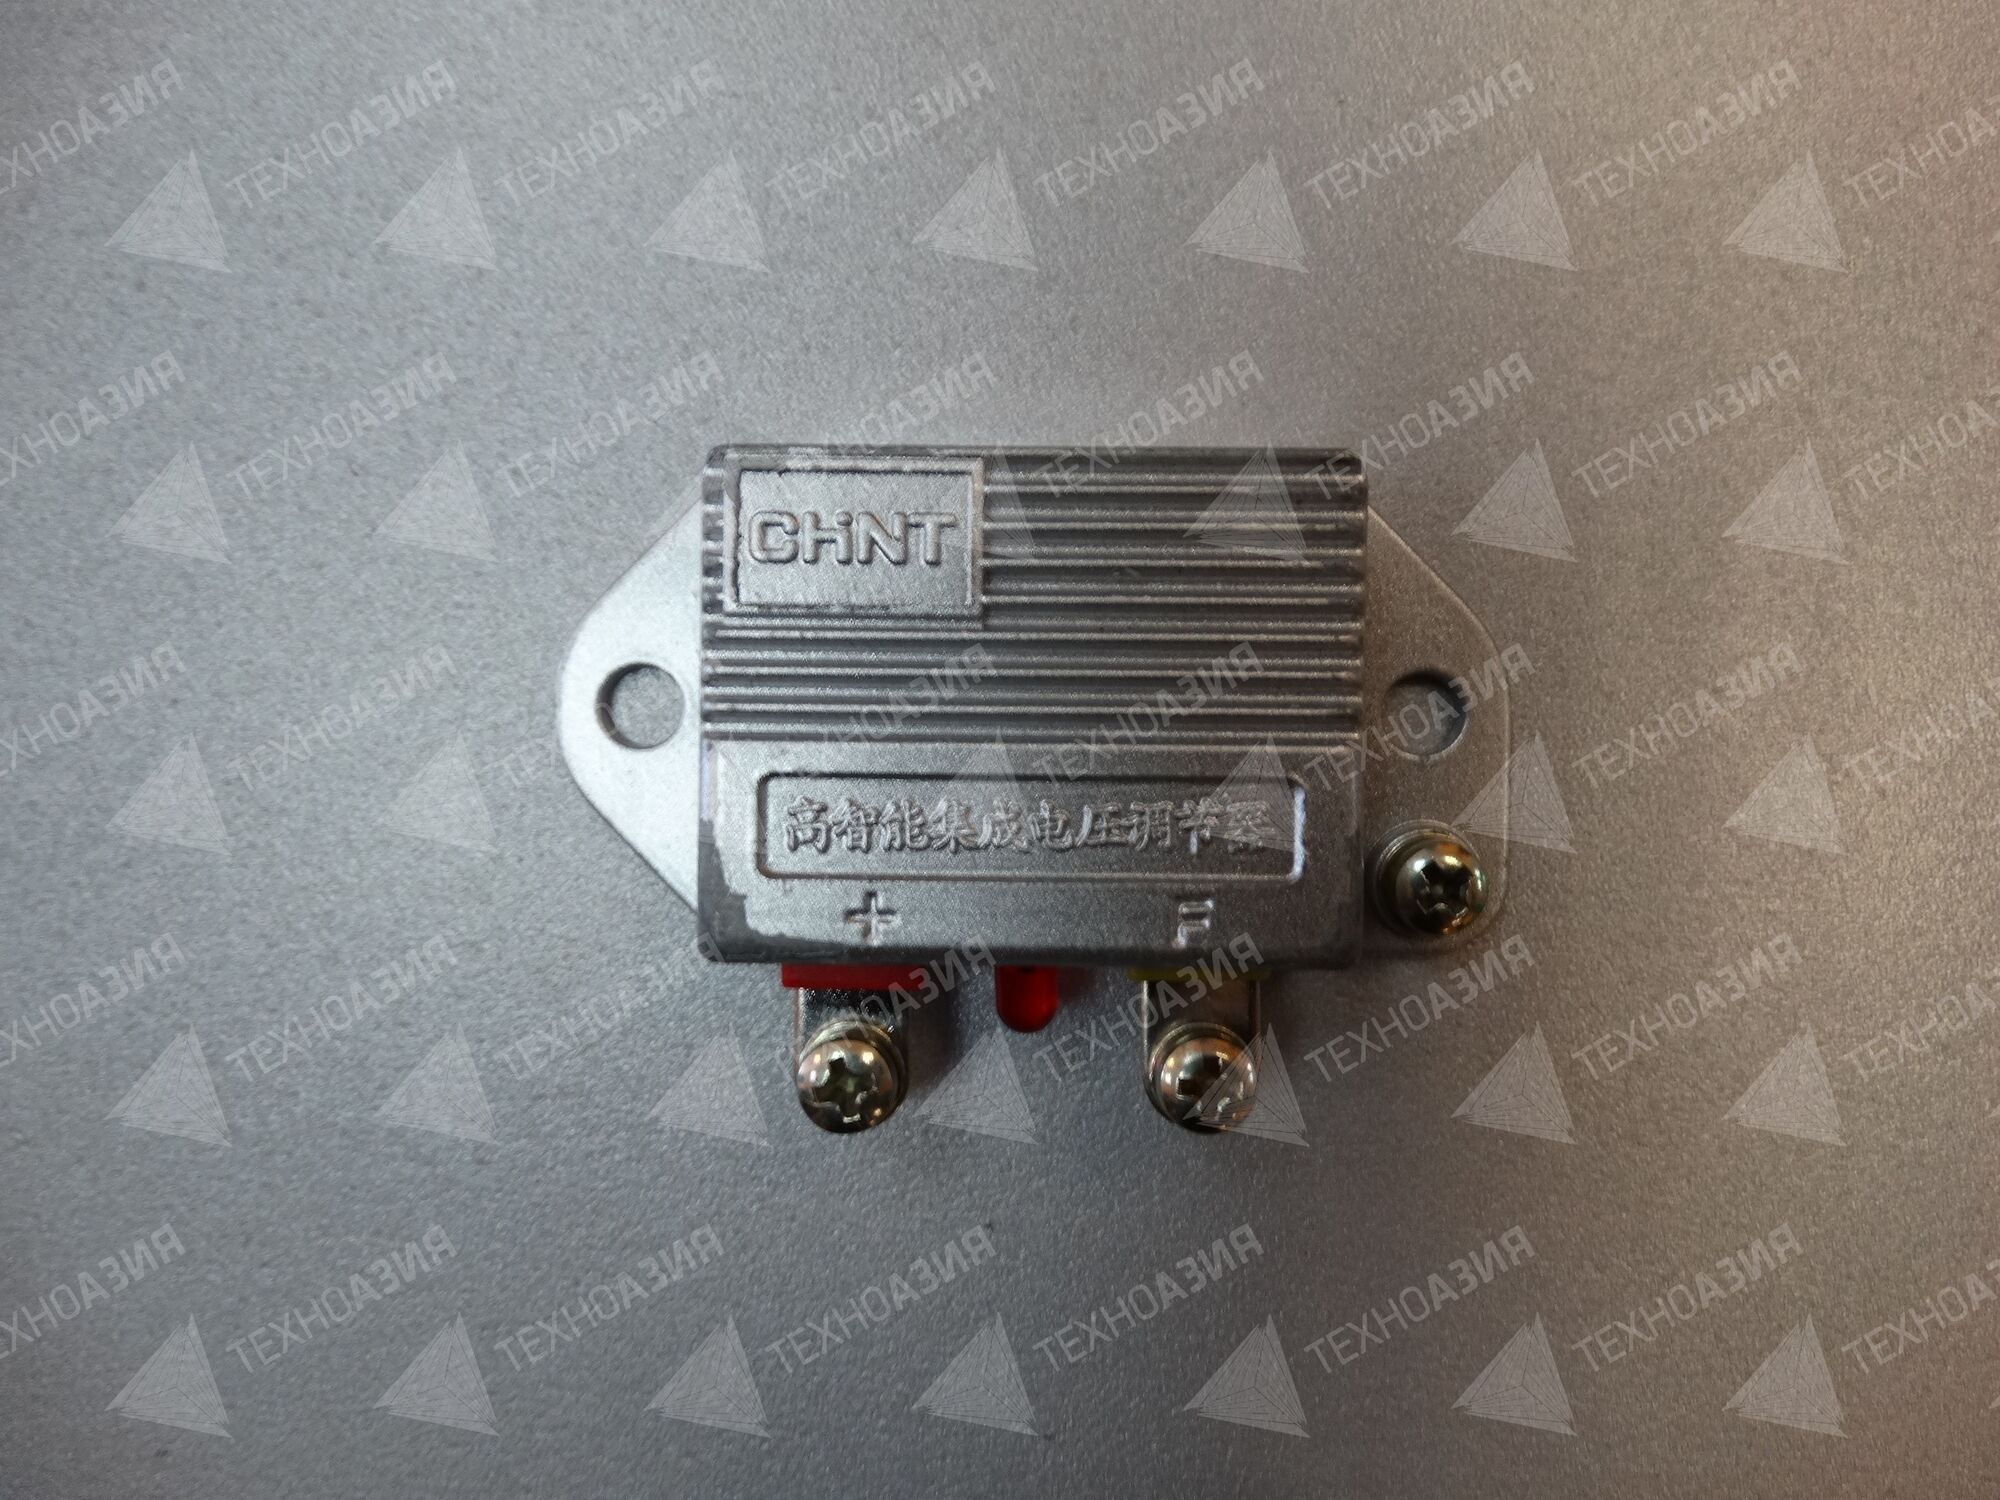 Реле генератора JFT249 (зарядка) 28V - 1500W